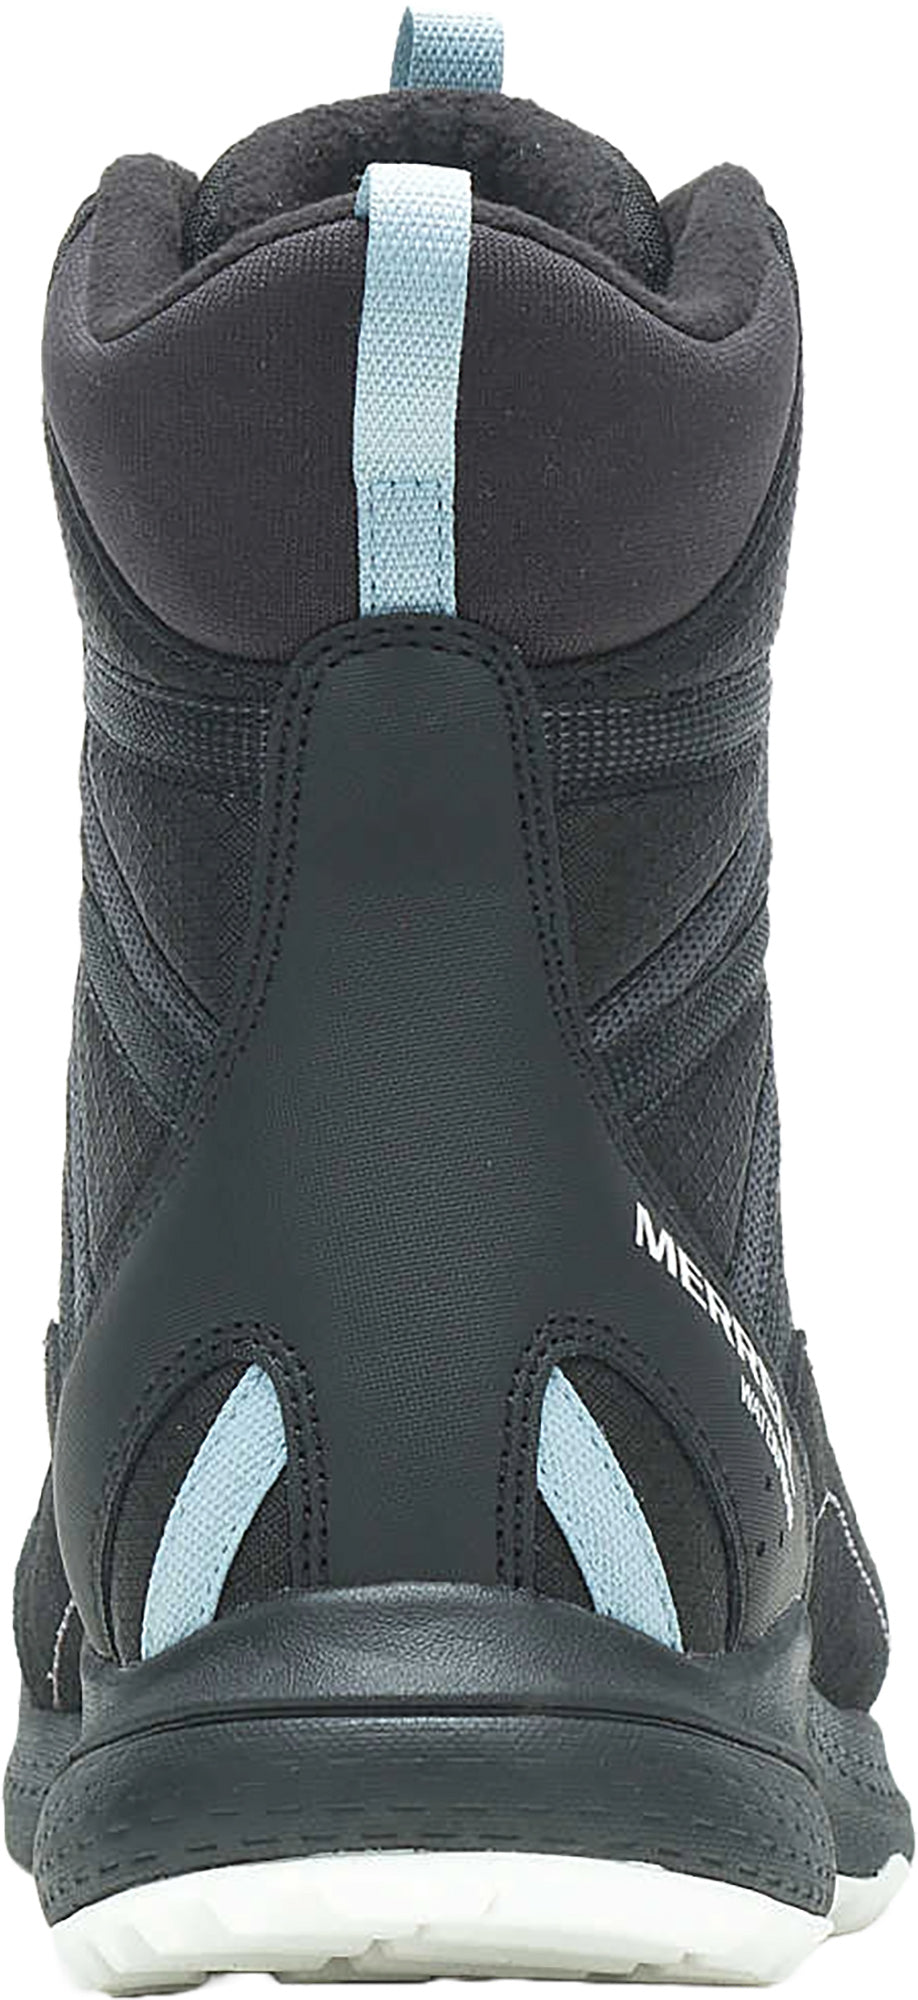 Merrell Bravada Edge 2 Thermo Mid Waterproof Boots - Women's